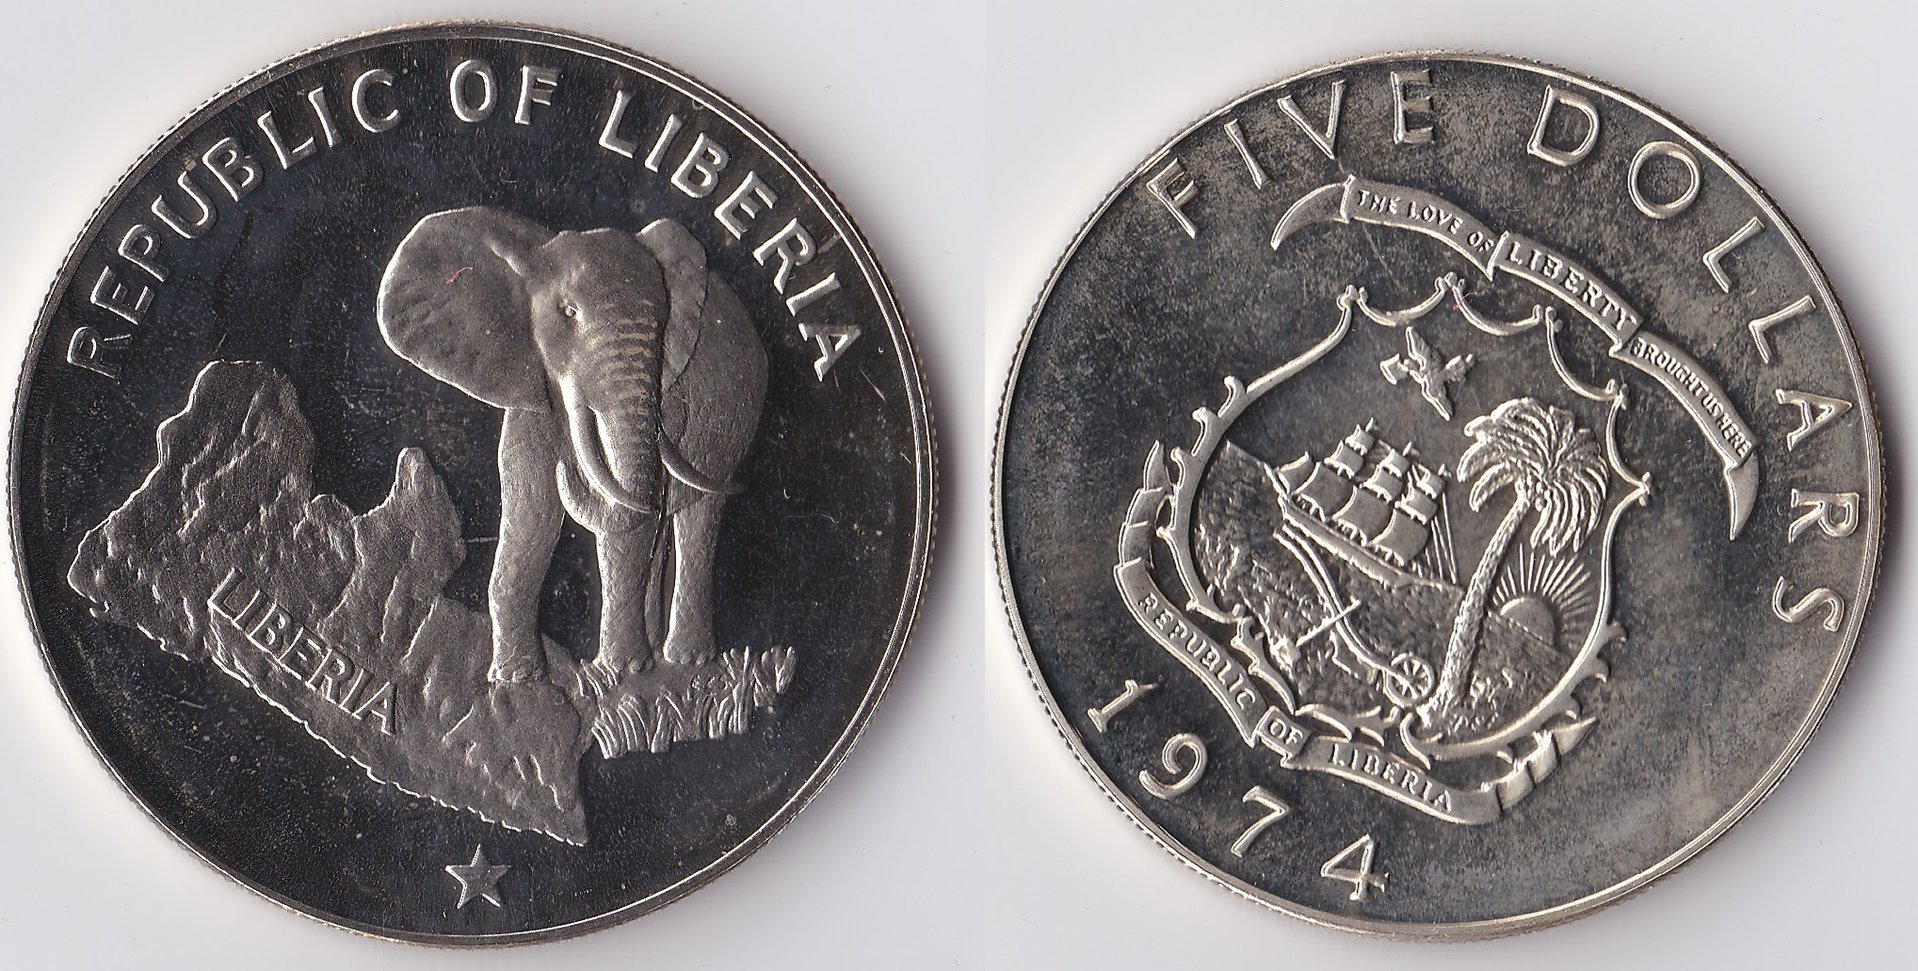 1974 liberia 5 dollars.jpg